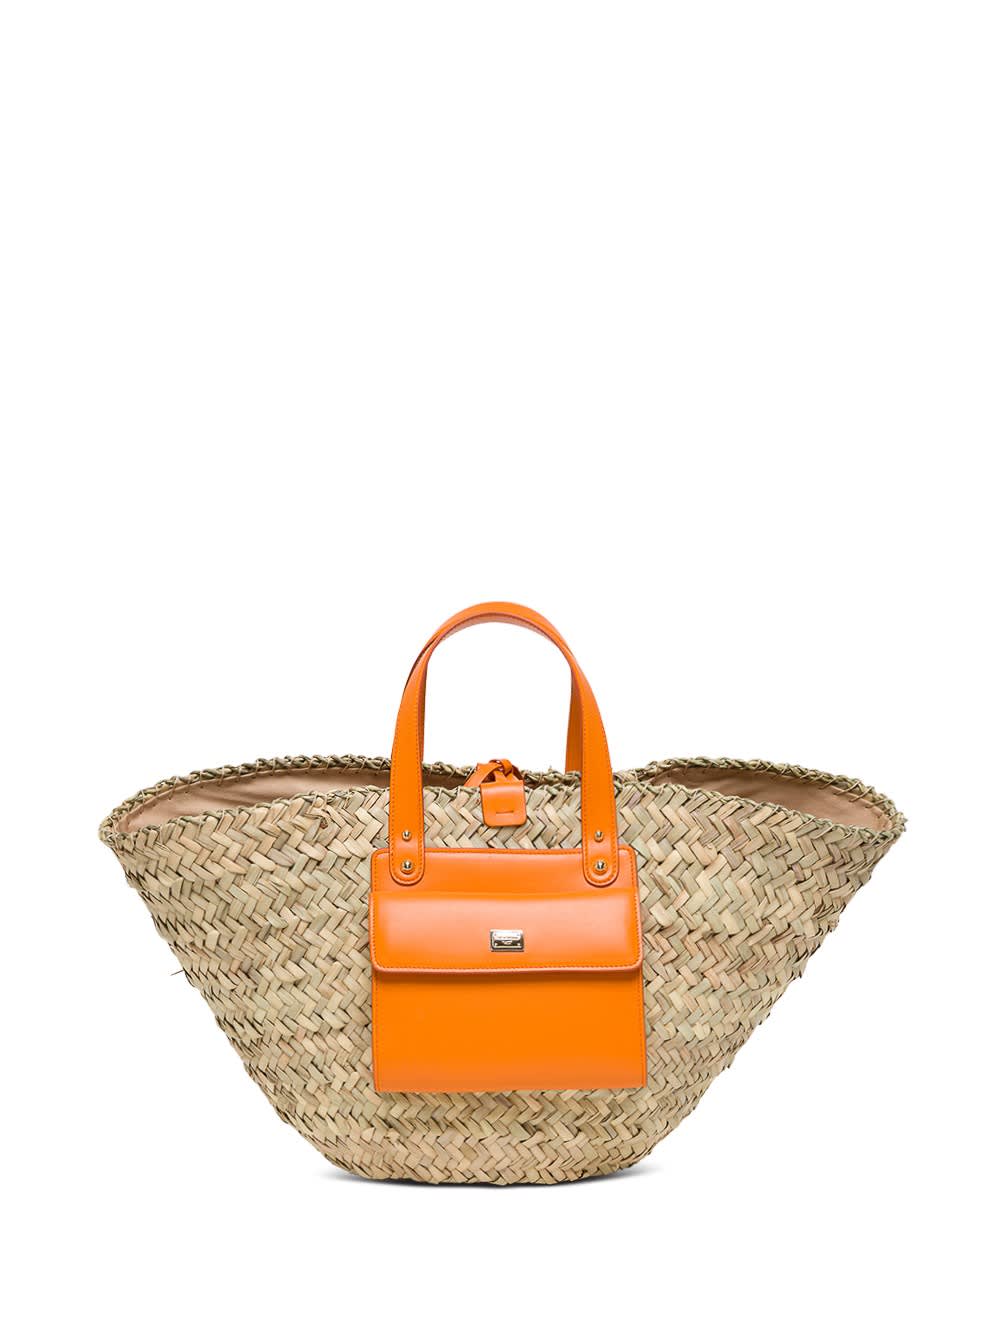 Dolce & Gabbana Kendra Straw Handbag